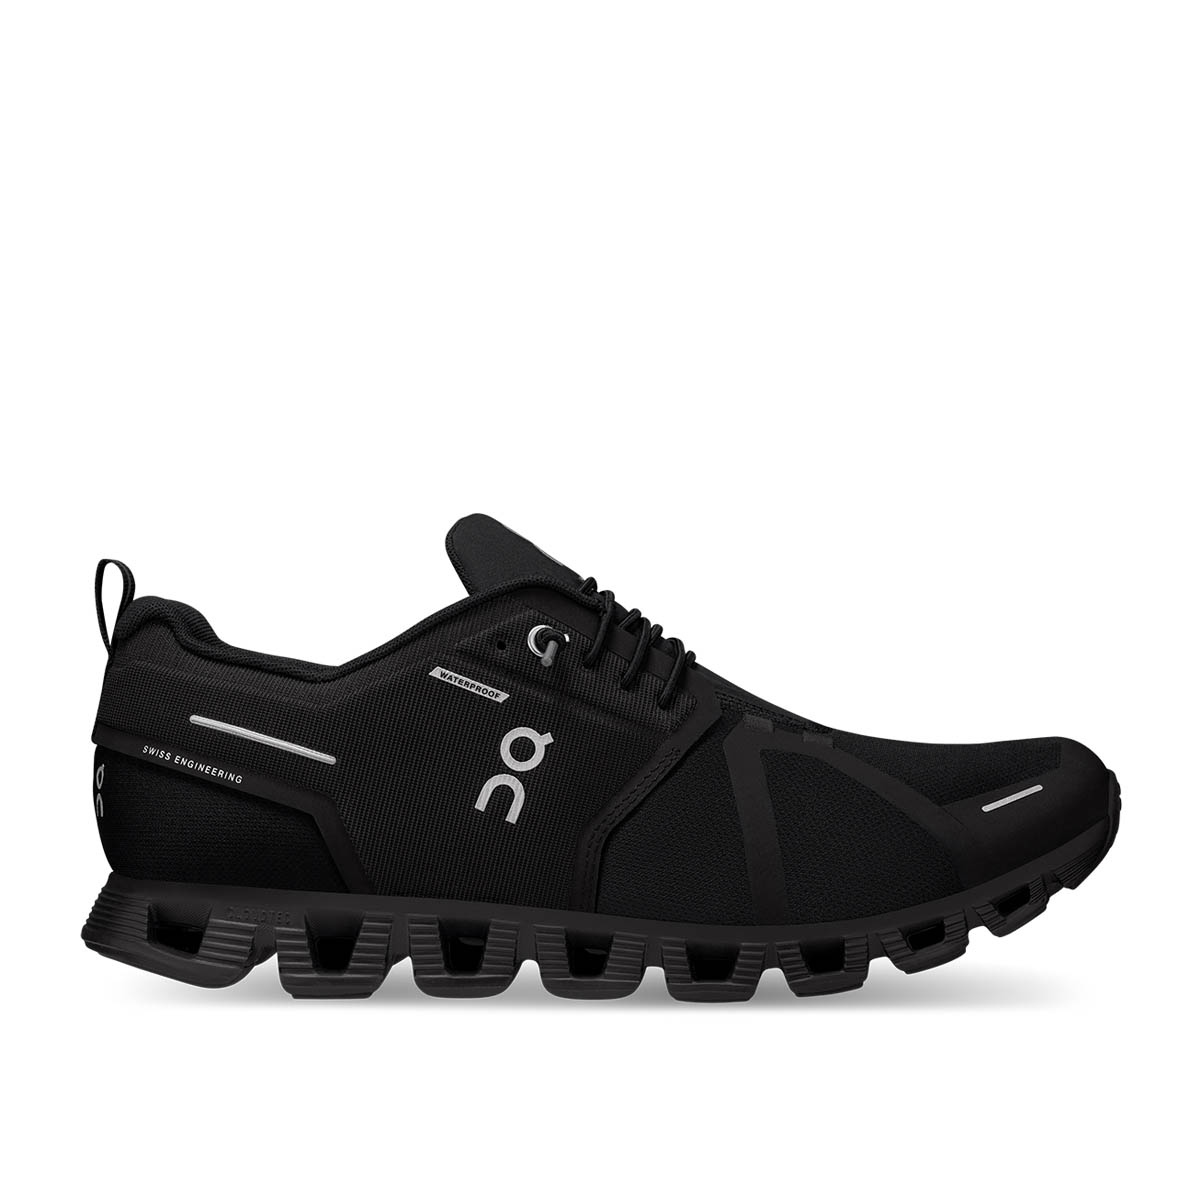 Buy Cloud5 Waterproof Running Shoes - Black Online in Kuwait | Boutiqaat